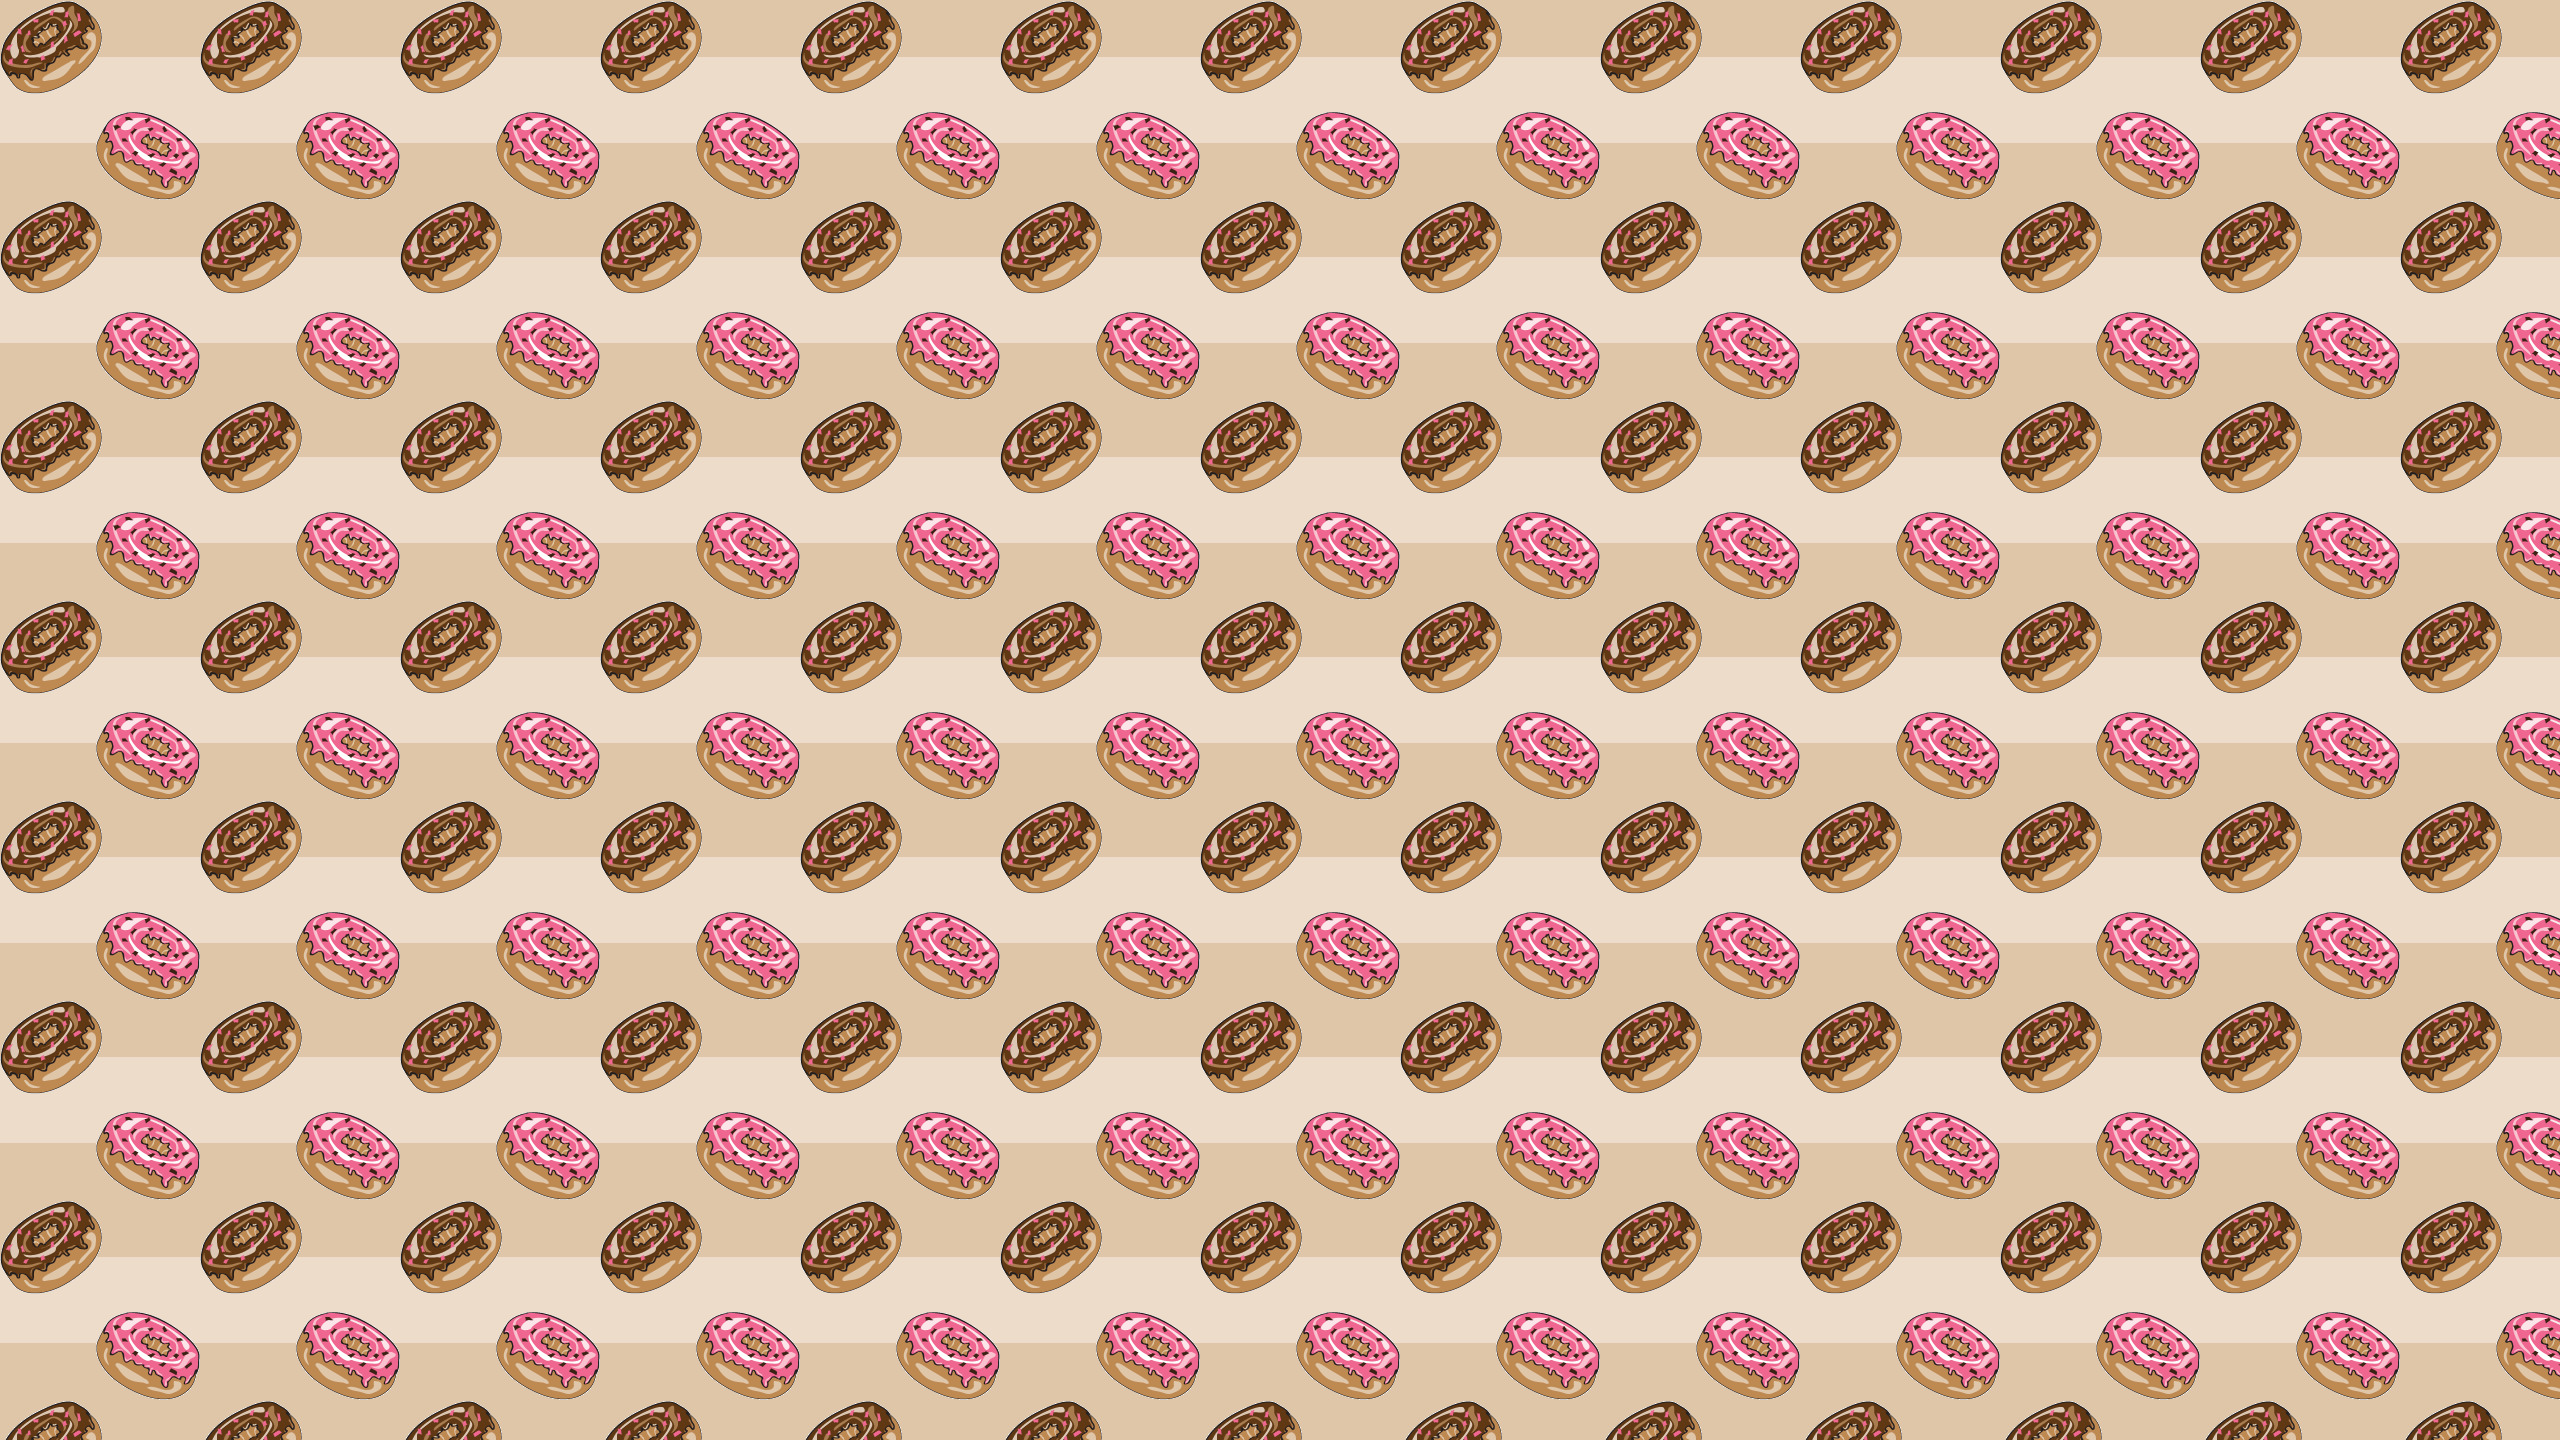 2560x1440 Donuts Desktop Wallpaper